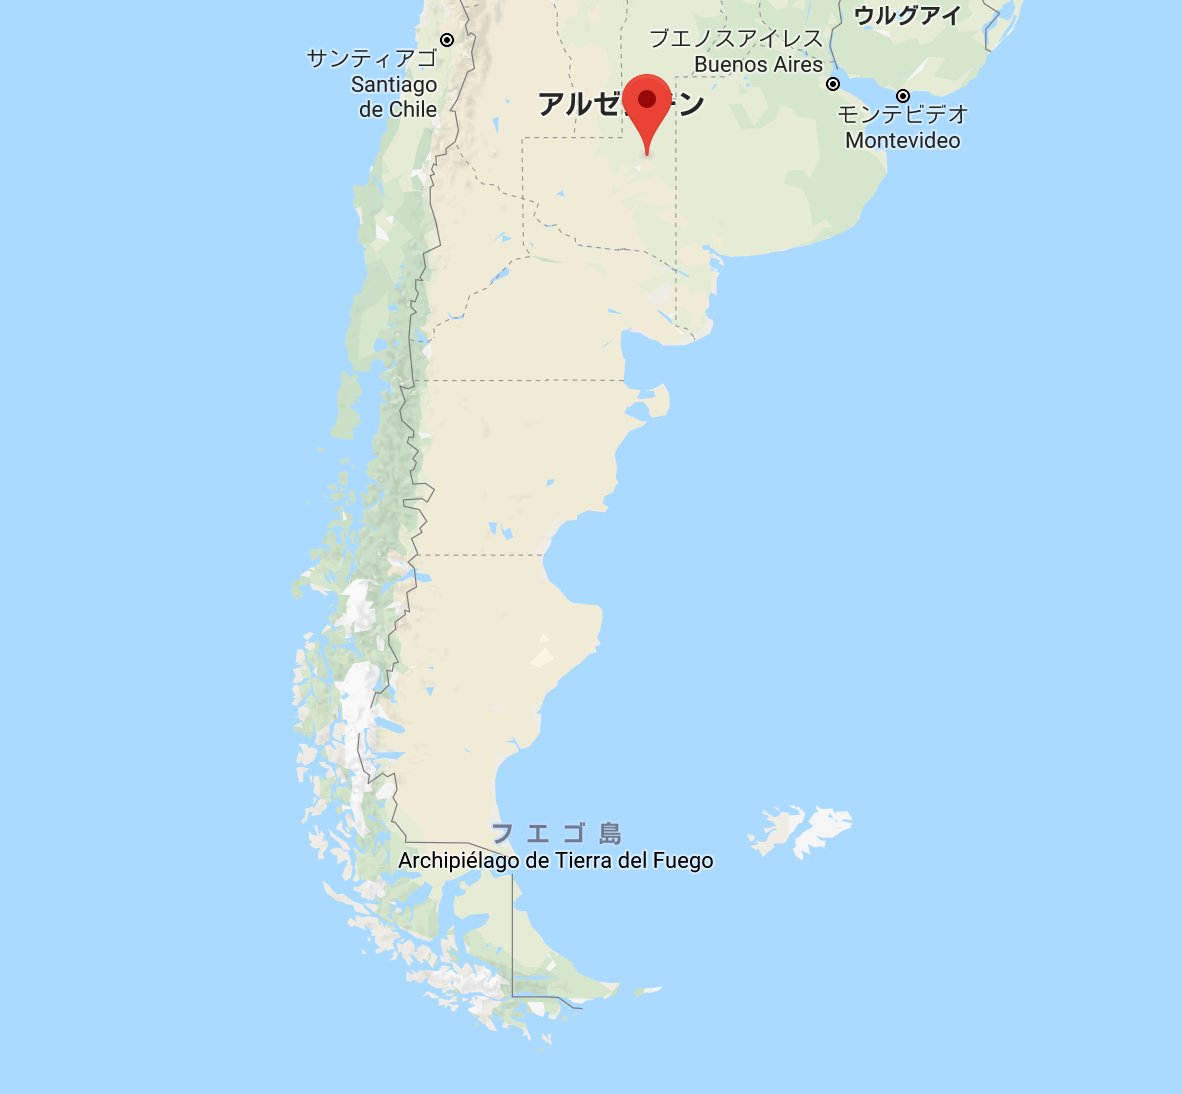 Cmk2wl 18年2月日 アルゼンチン サンタローサのドン トマス湖で魚の大量死 T Co 1bc4adzfyz 世界のあらゆる場所で魚の大量死が発生している